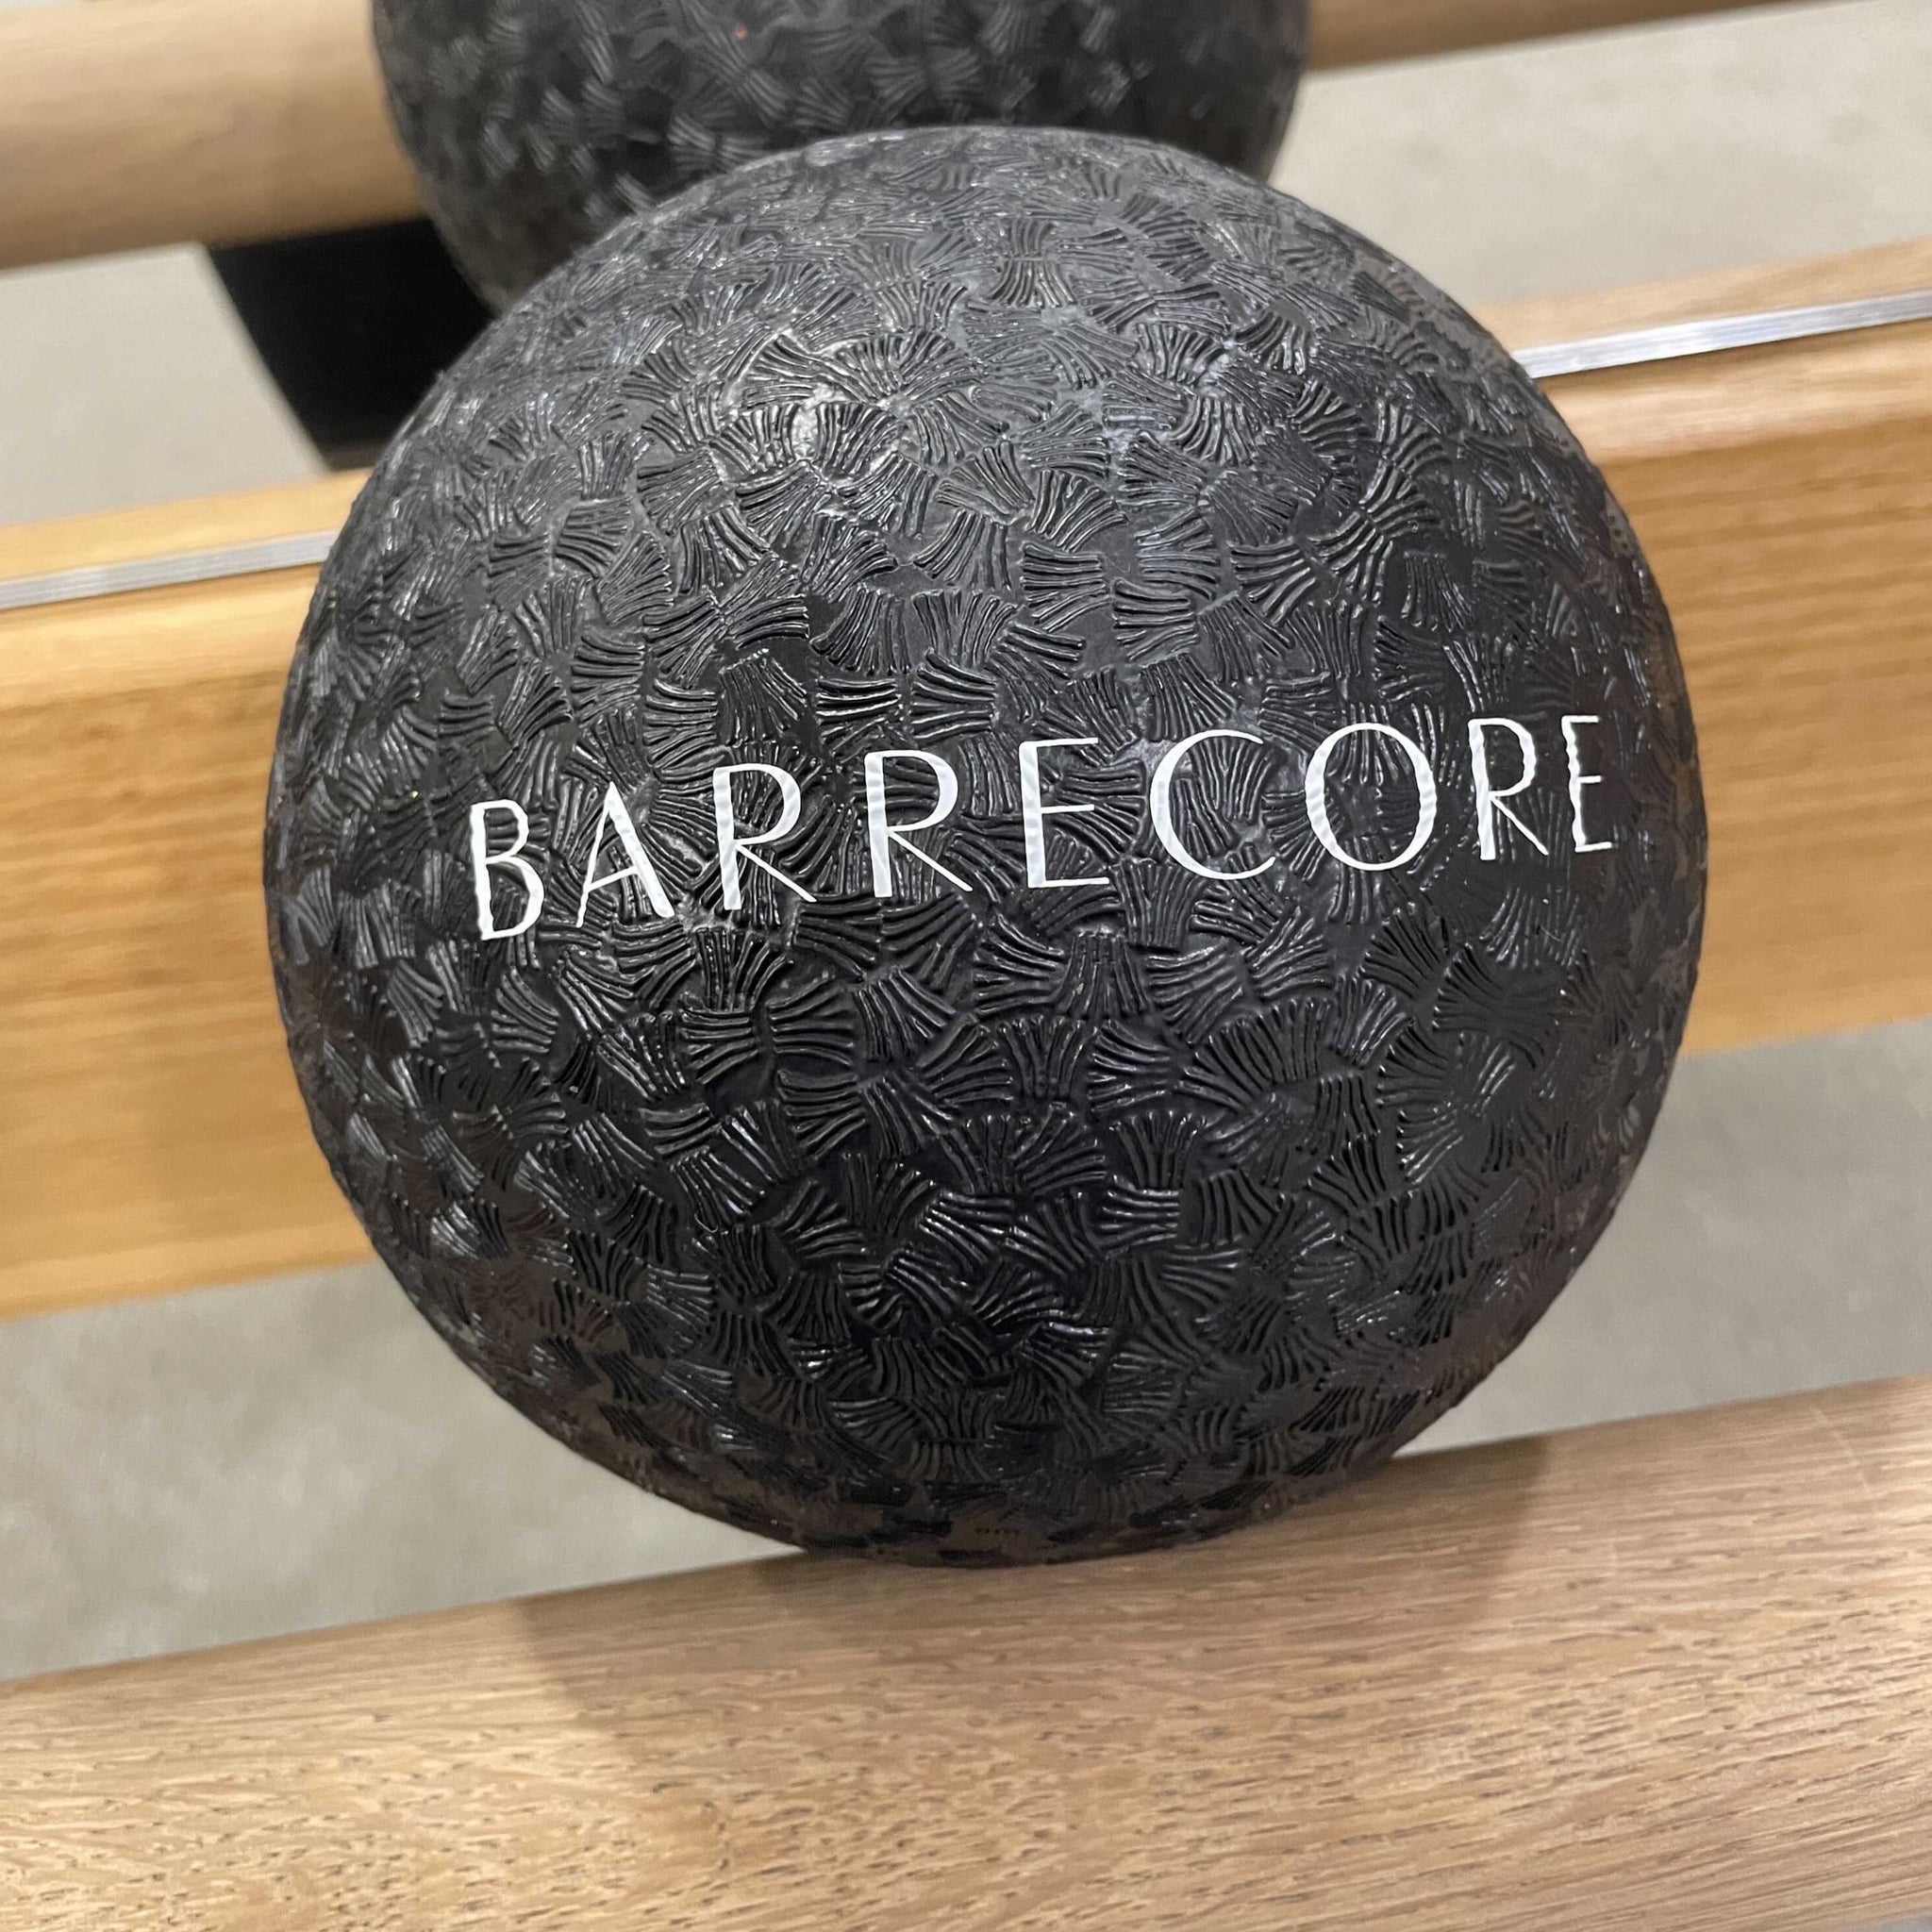 Barrecore Ball